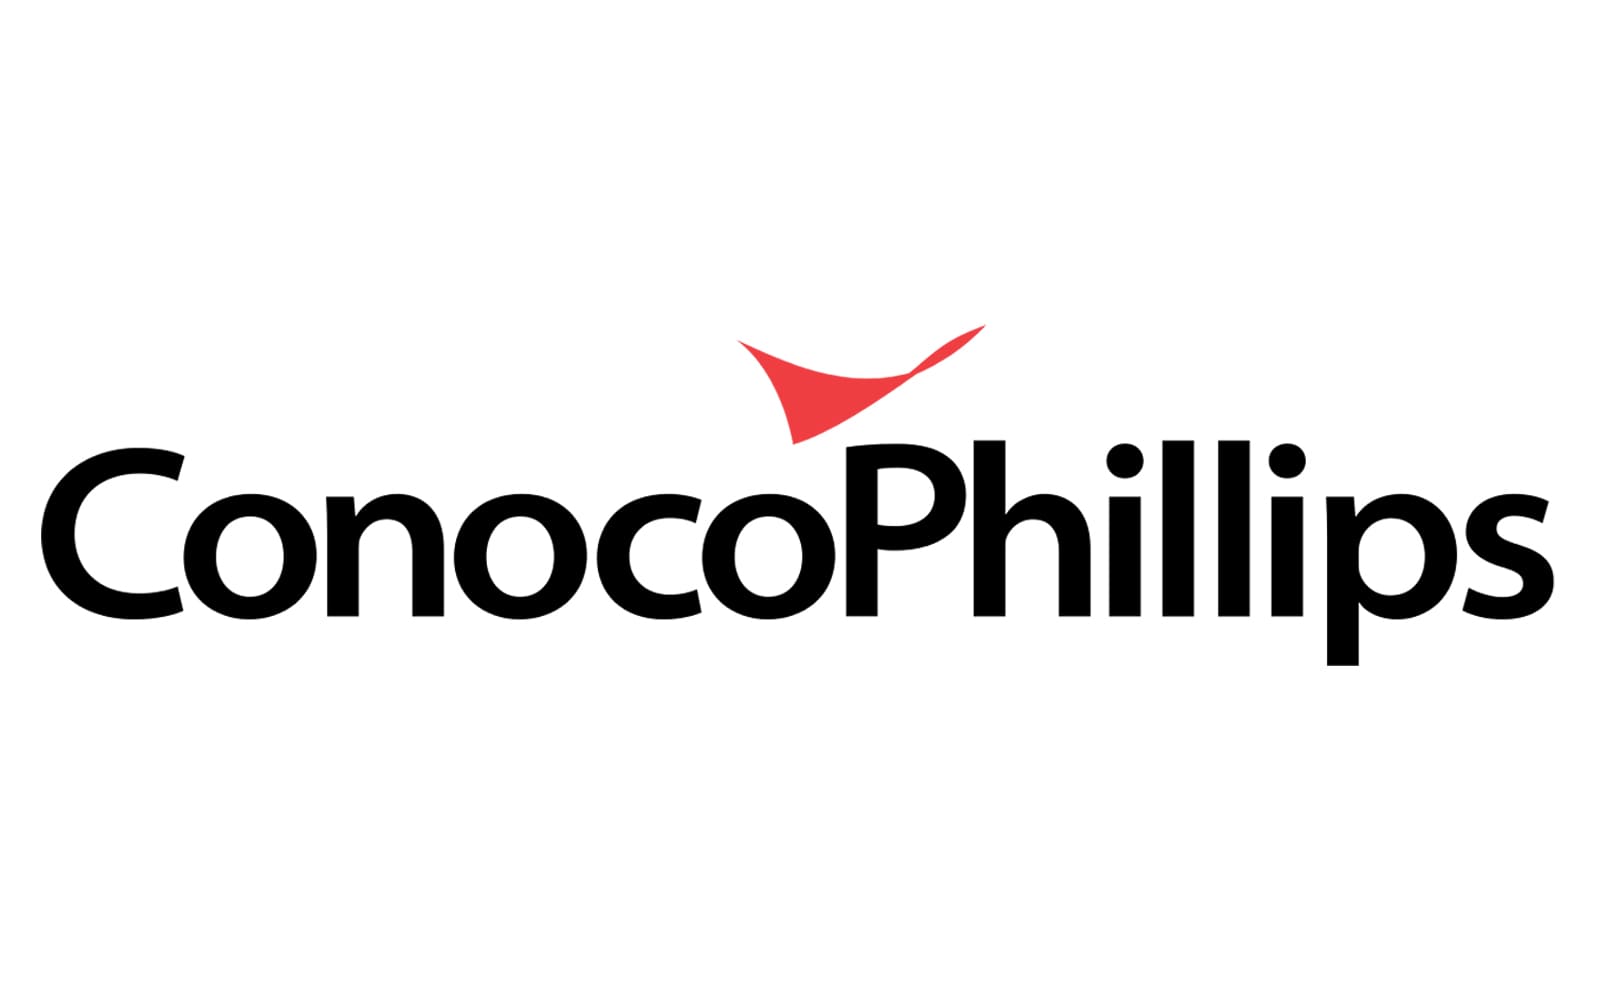  logo for conocophillips.